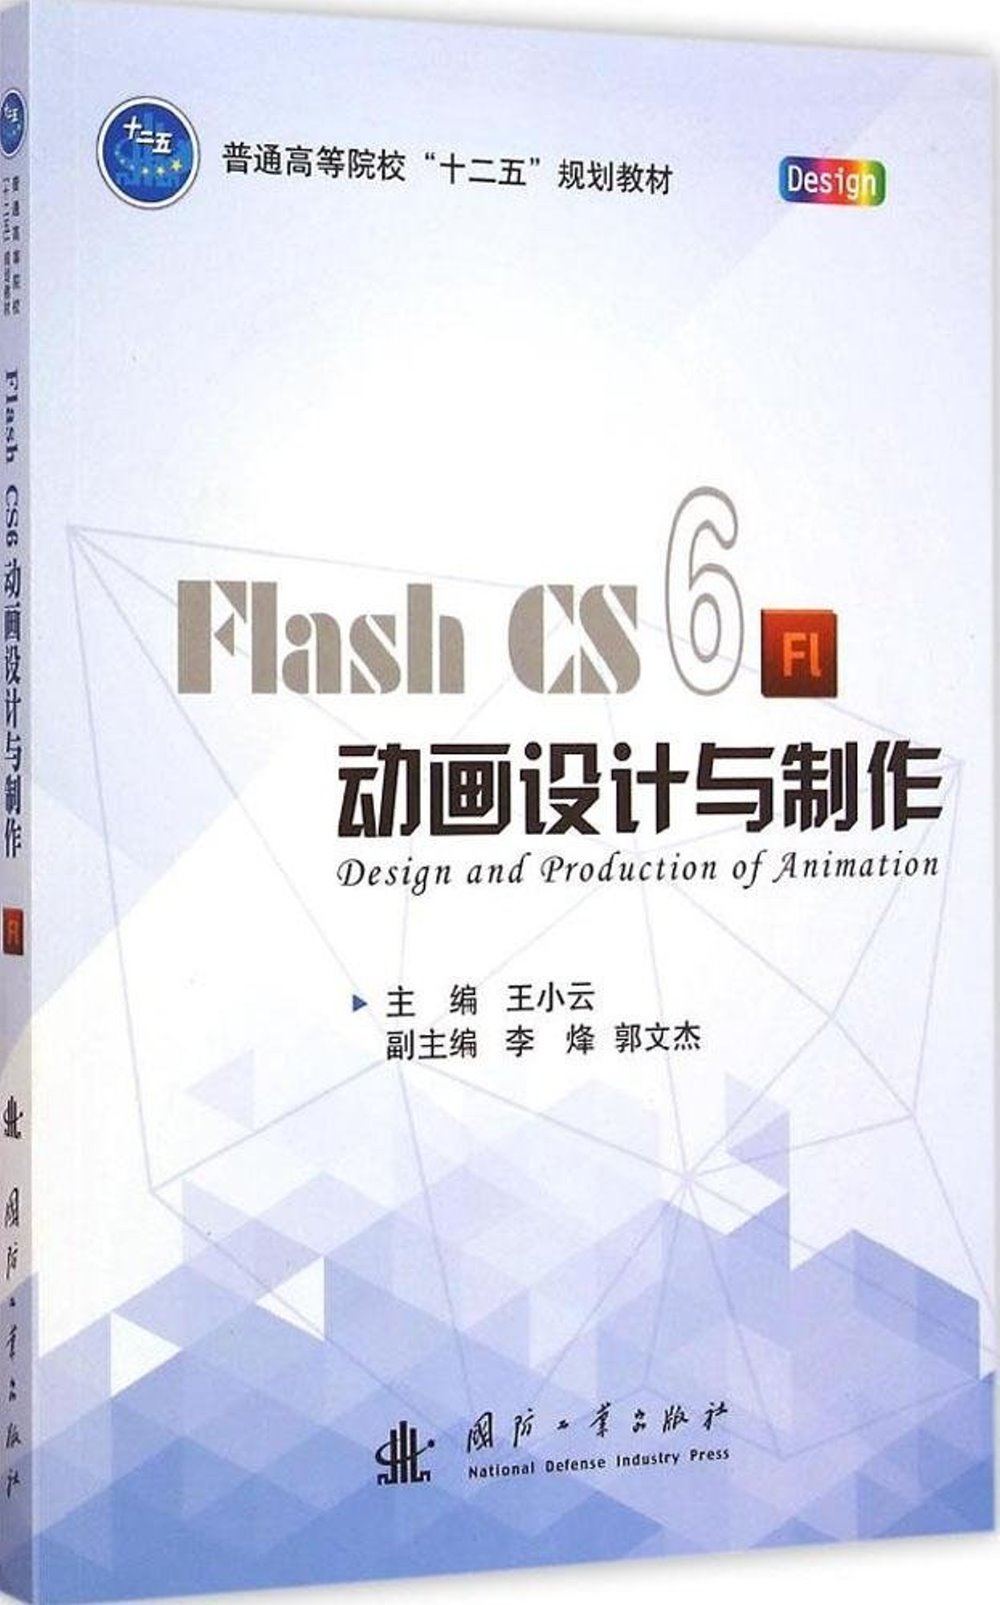 Flash CS6 動畫設計與制作